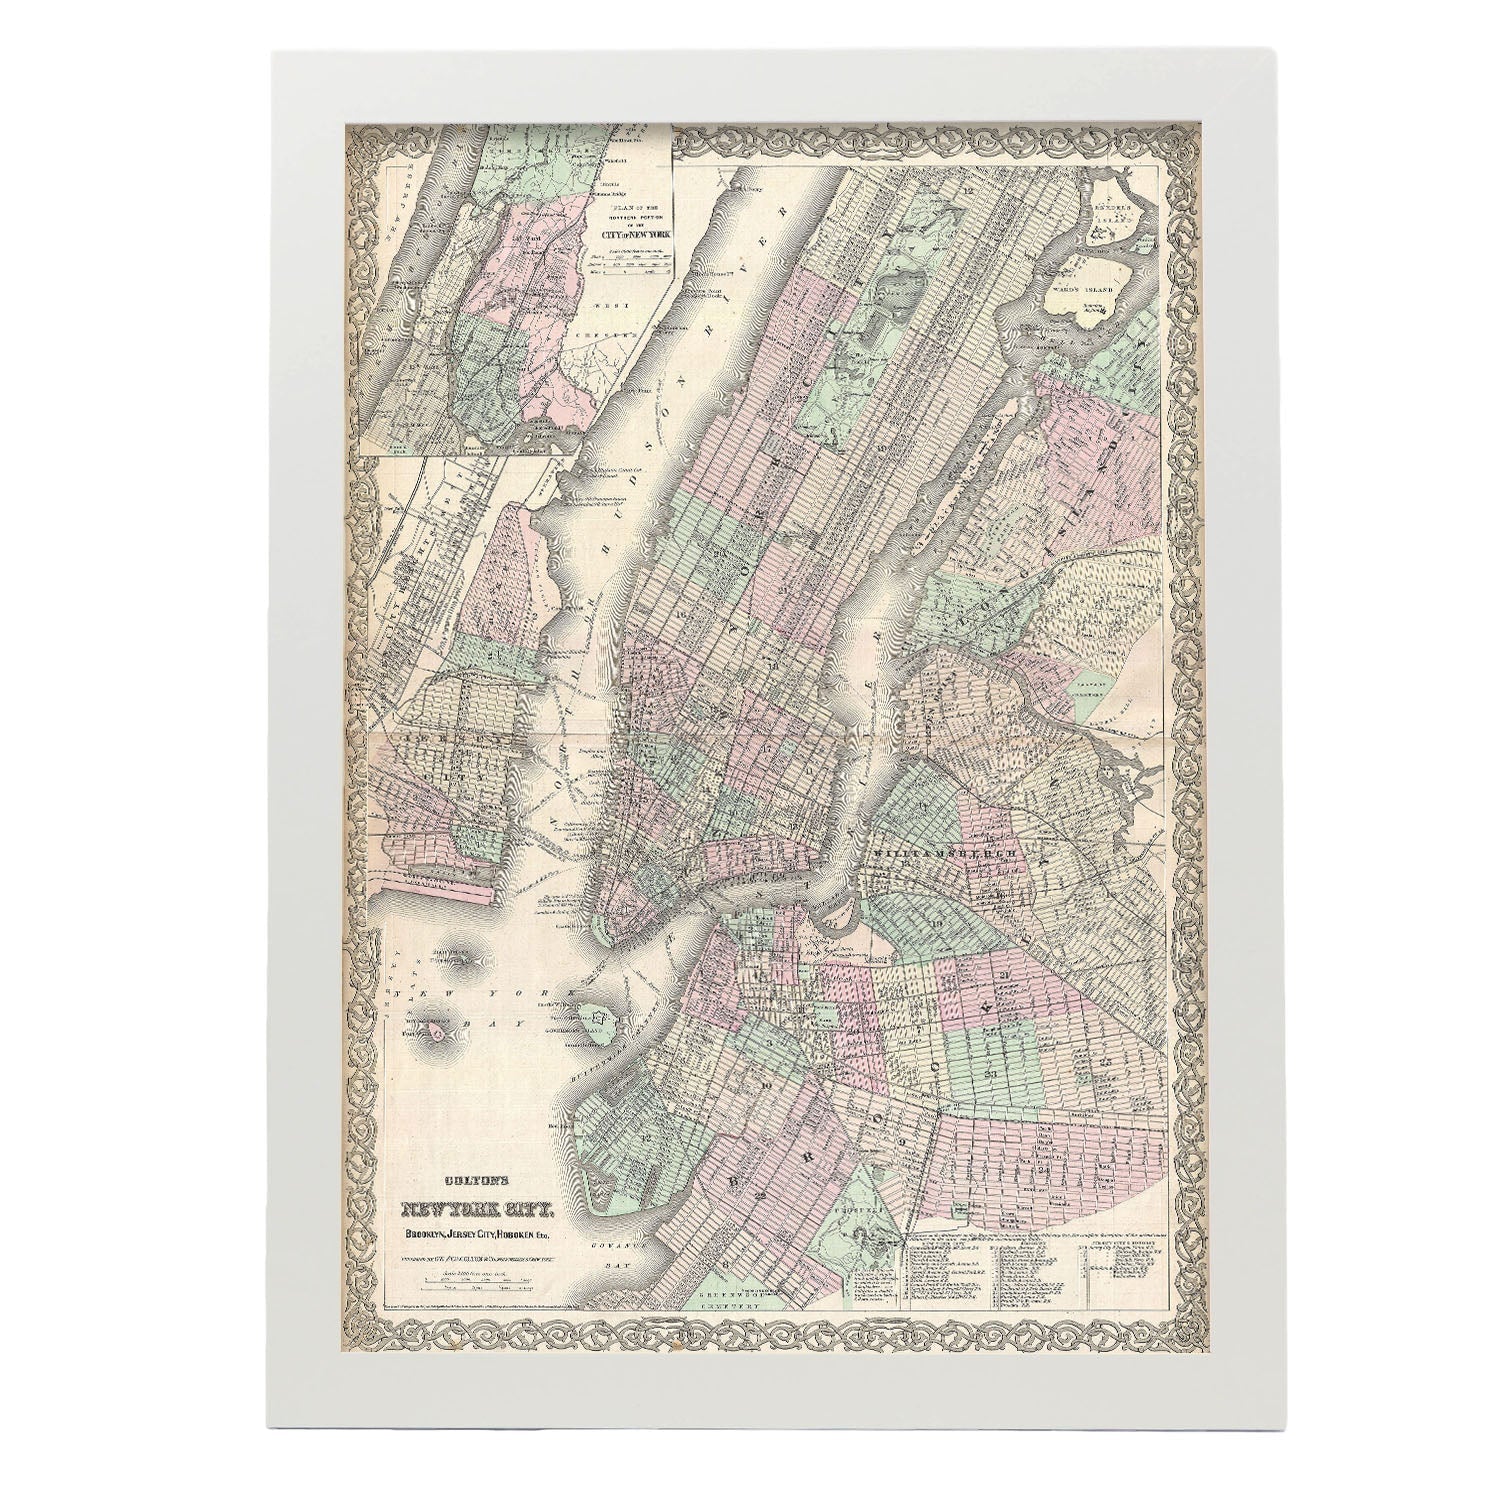 1865 Colton Map of New York City Manhattan Brooklyn Long Island City Geographicus NewYorkCity colton 1866-Artwork-Nacnic-A3-Marco Blanco-Nacnic Estudio SL